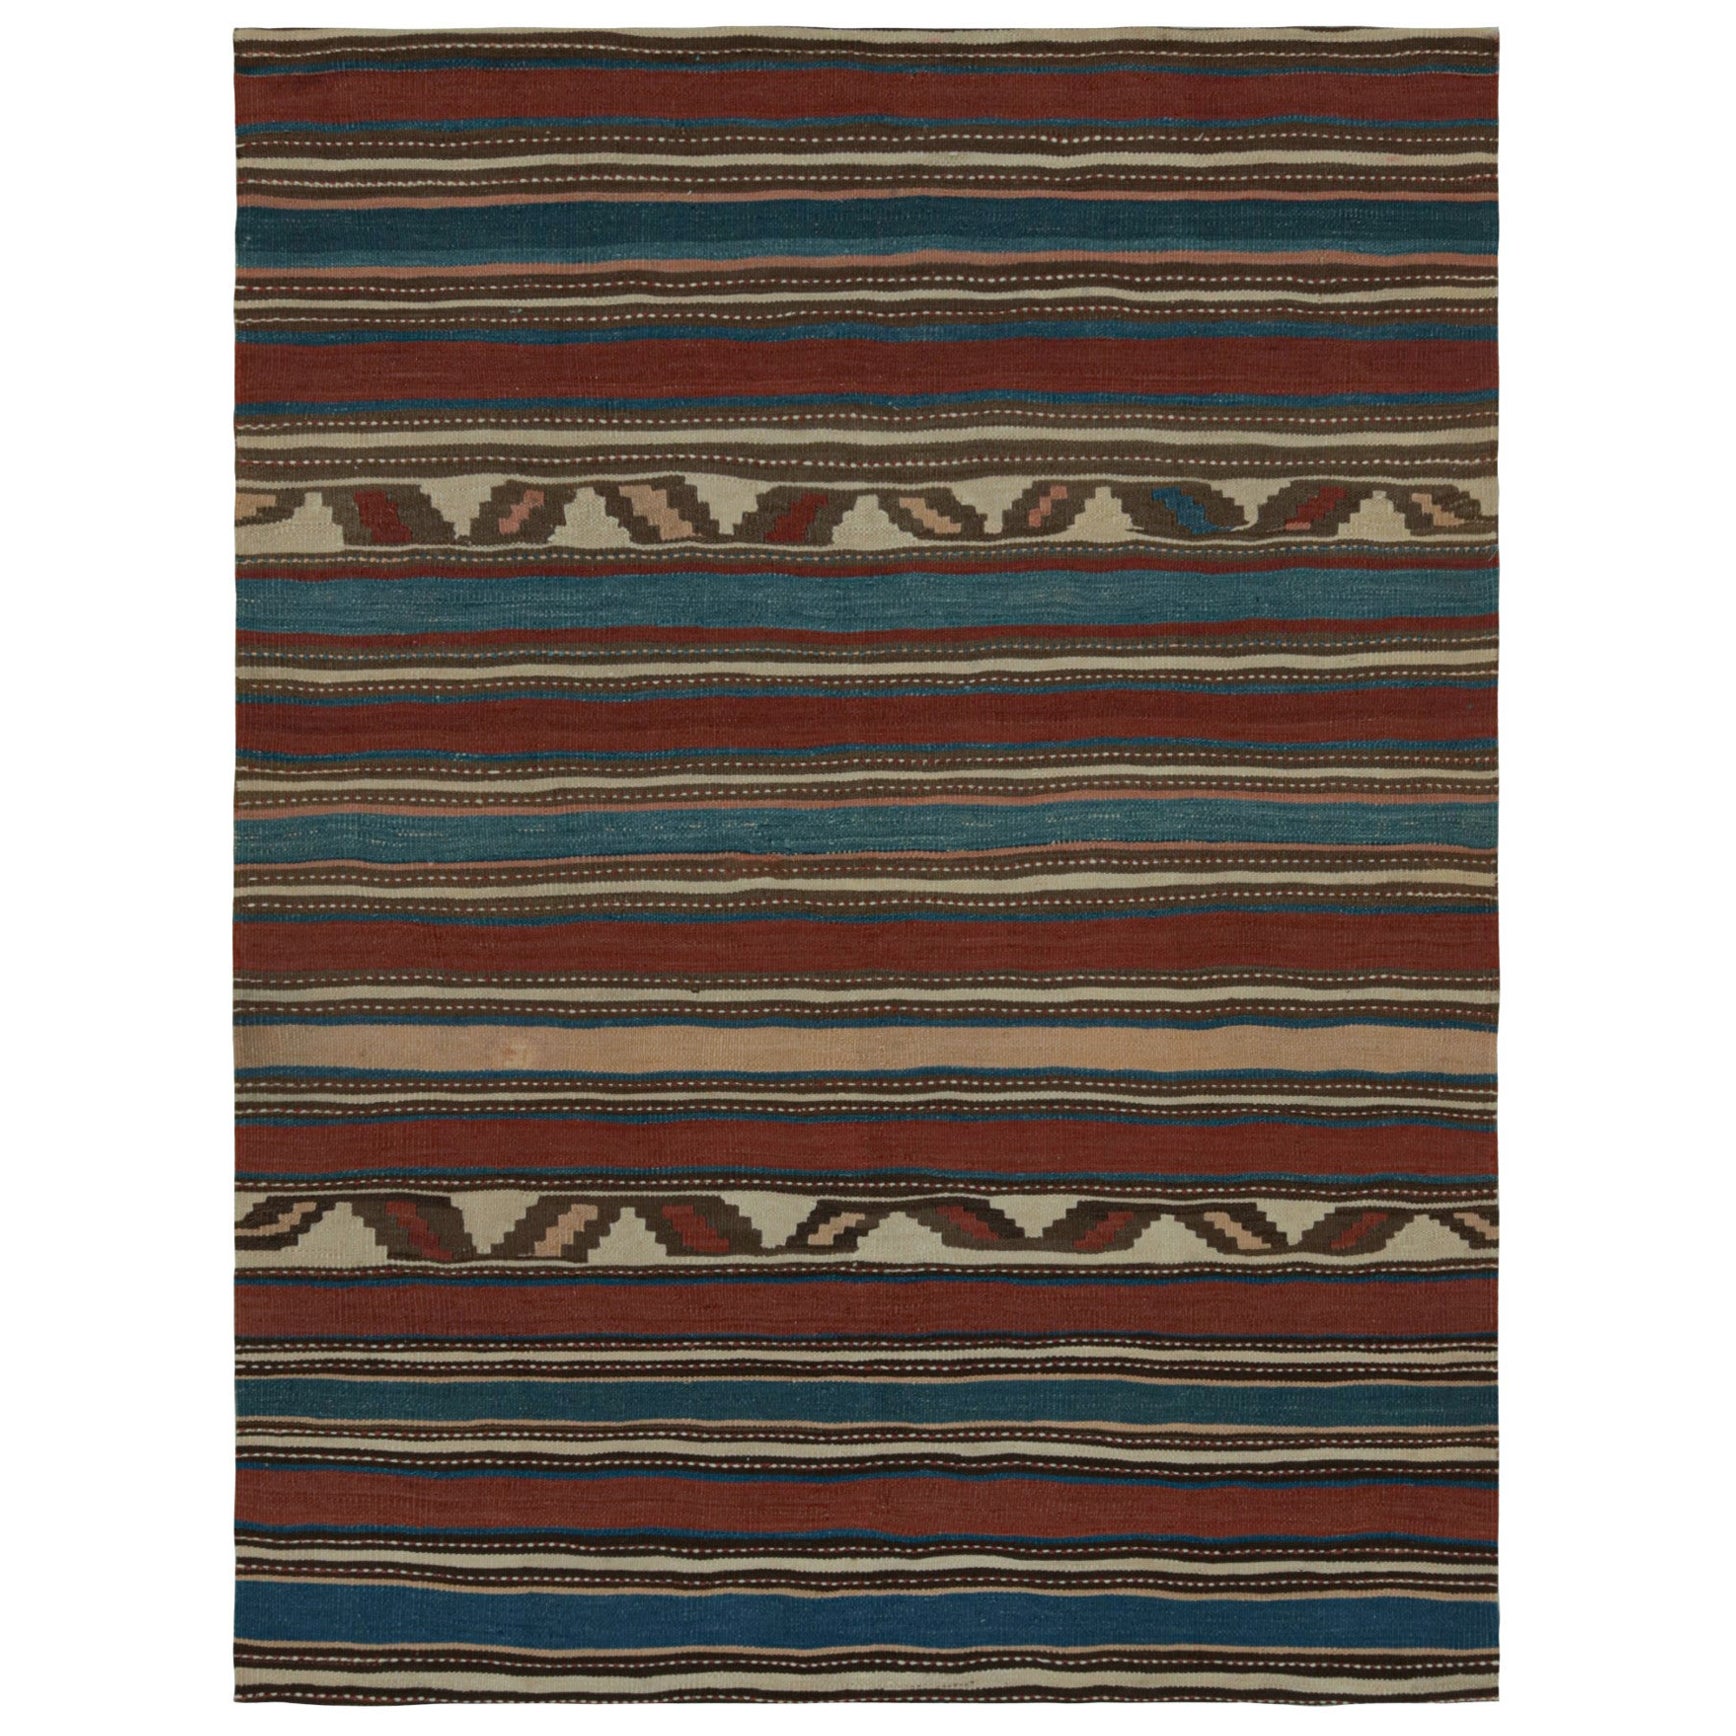 Rug & Kilim’s Afghan Tribal Kilim Rug in Red with Stripes and Geometric Patterns